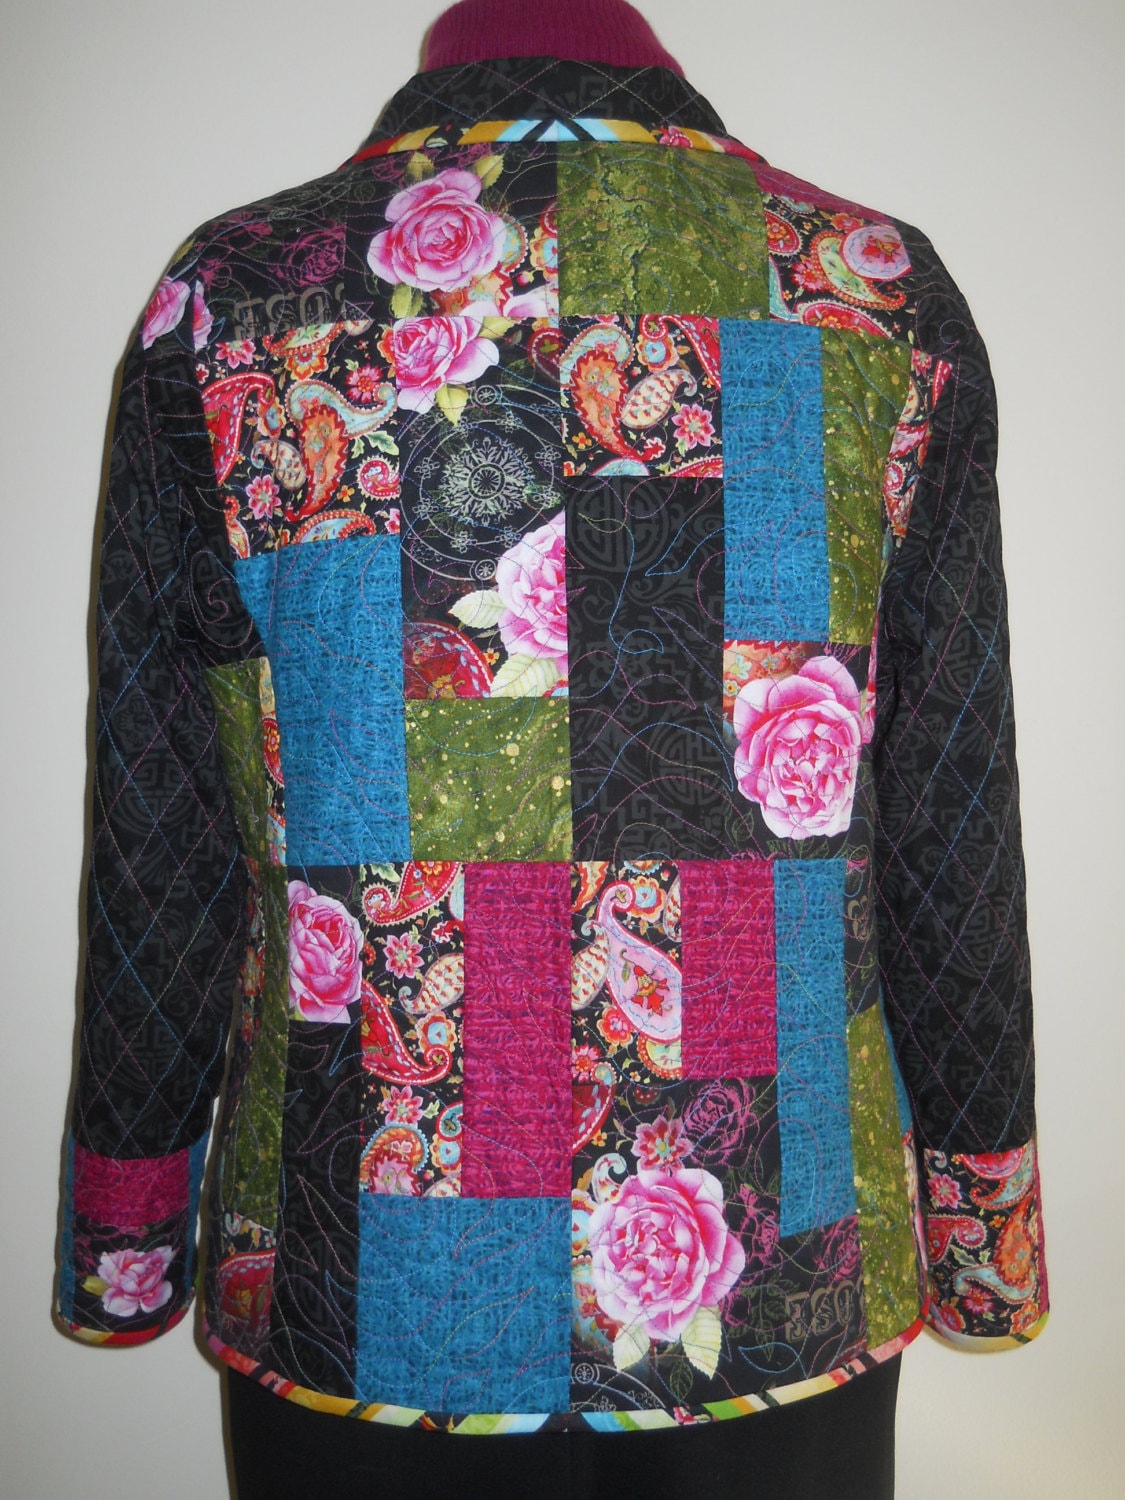 Flower Patch Jacket & Bag Pattern - Etsy